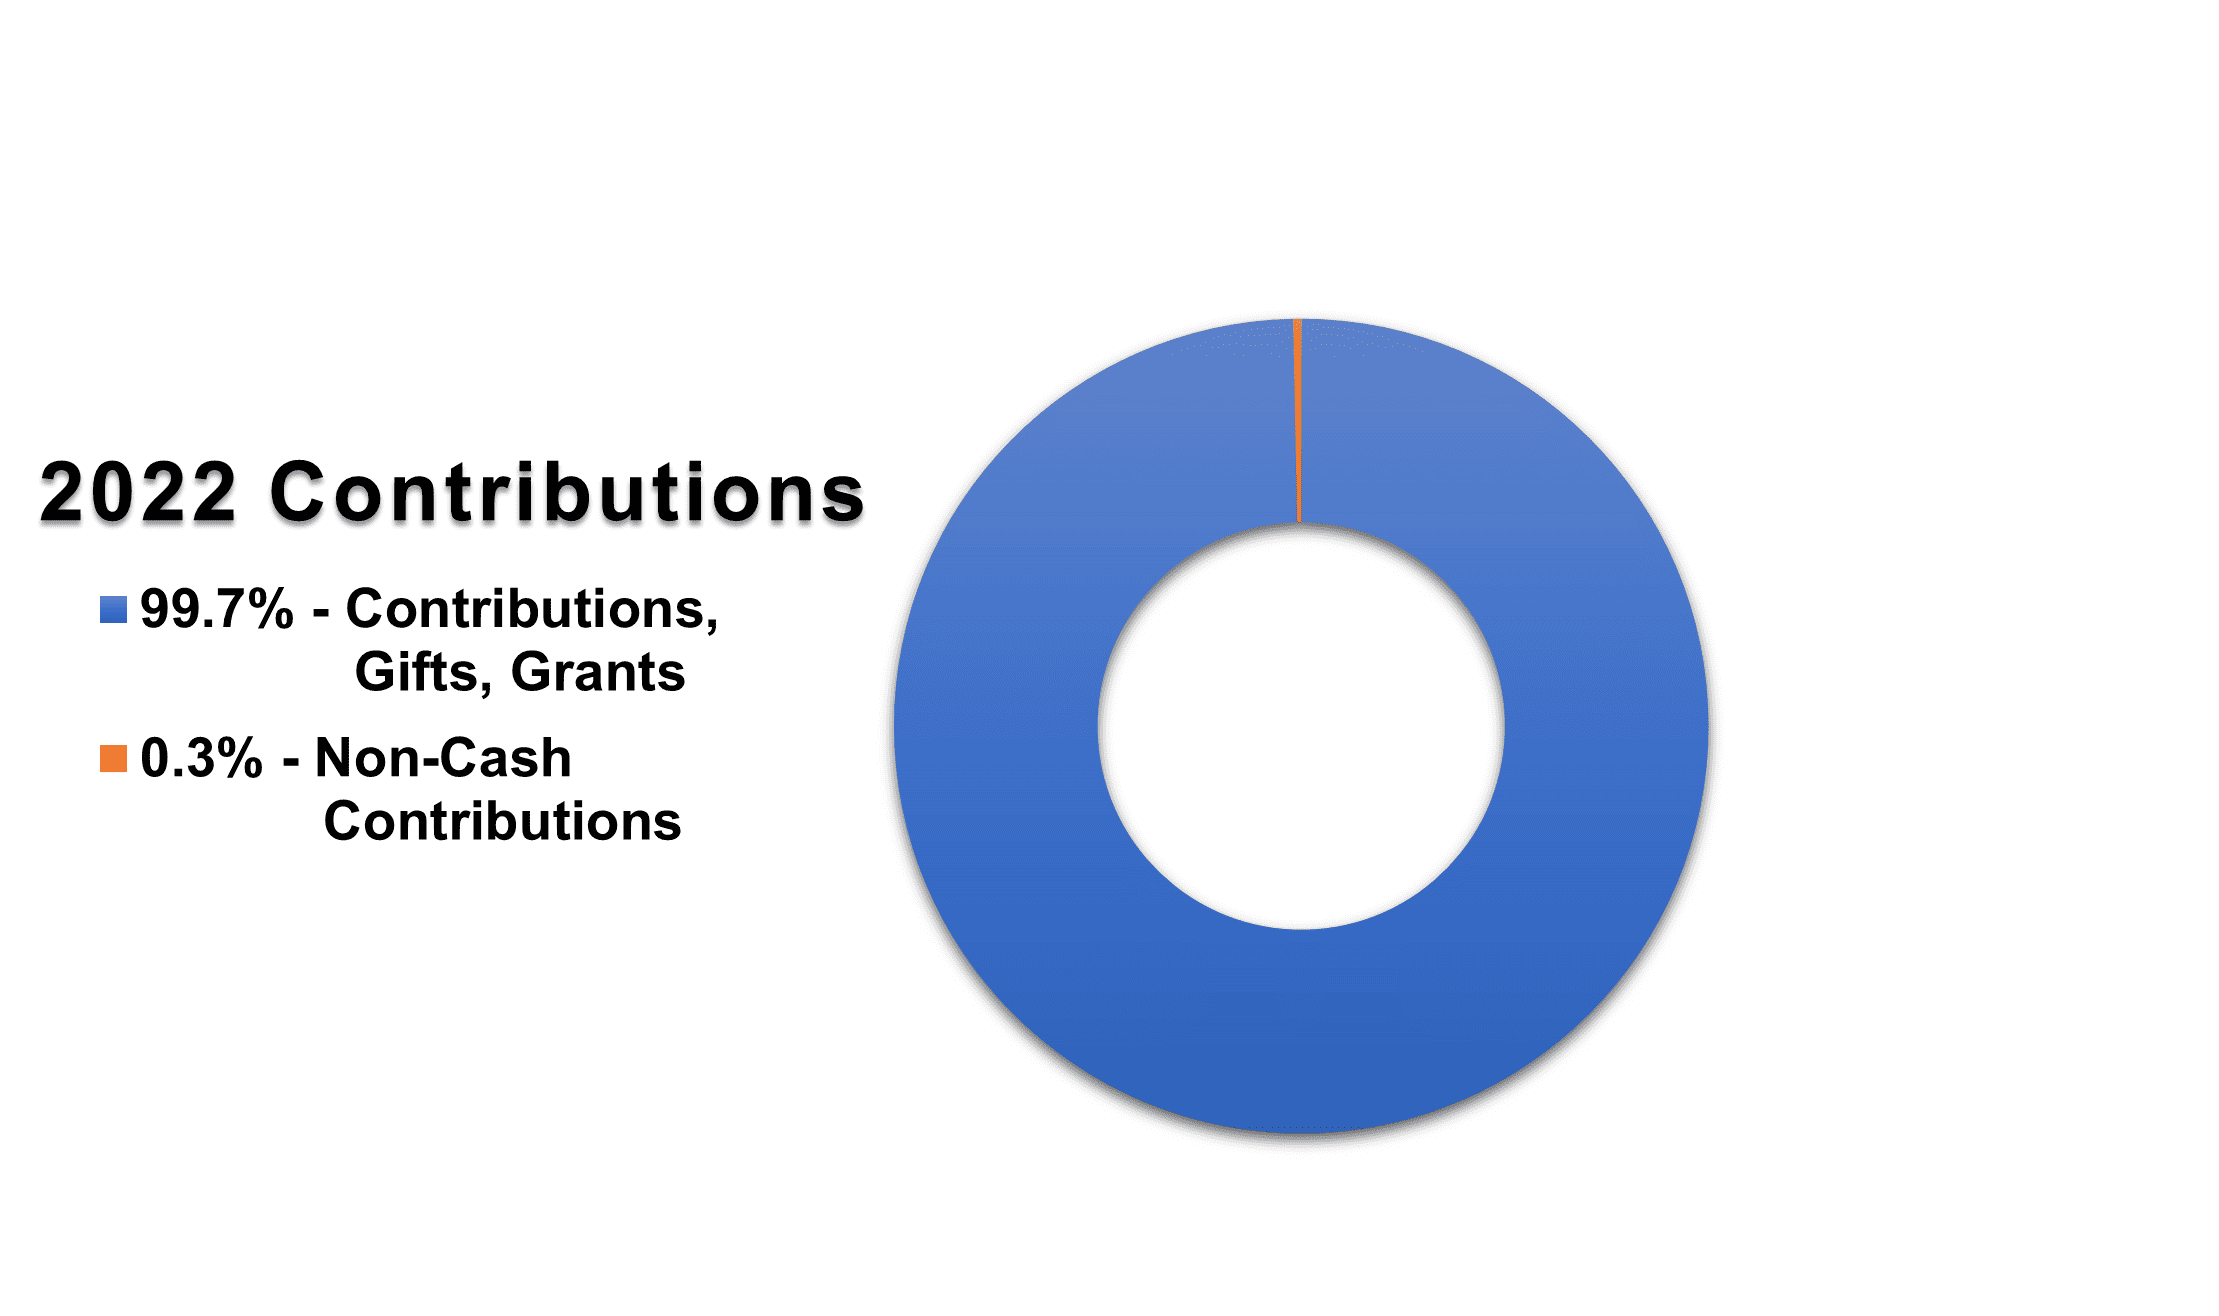 Contributions